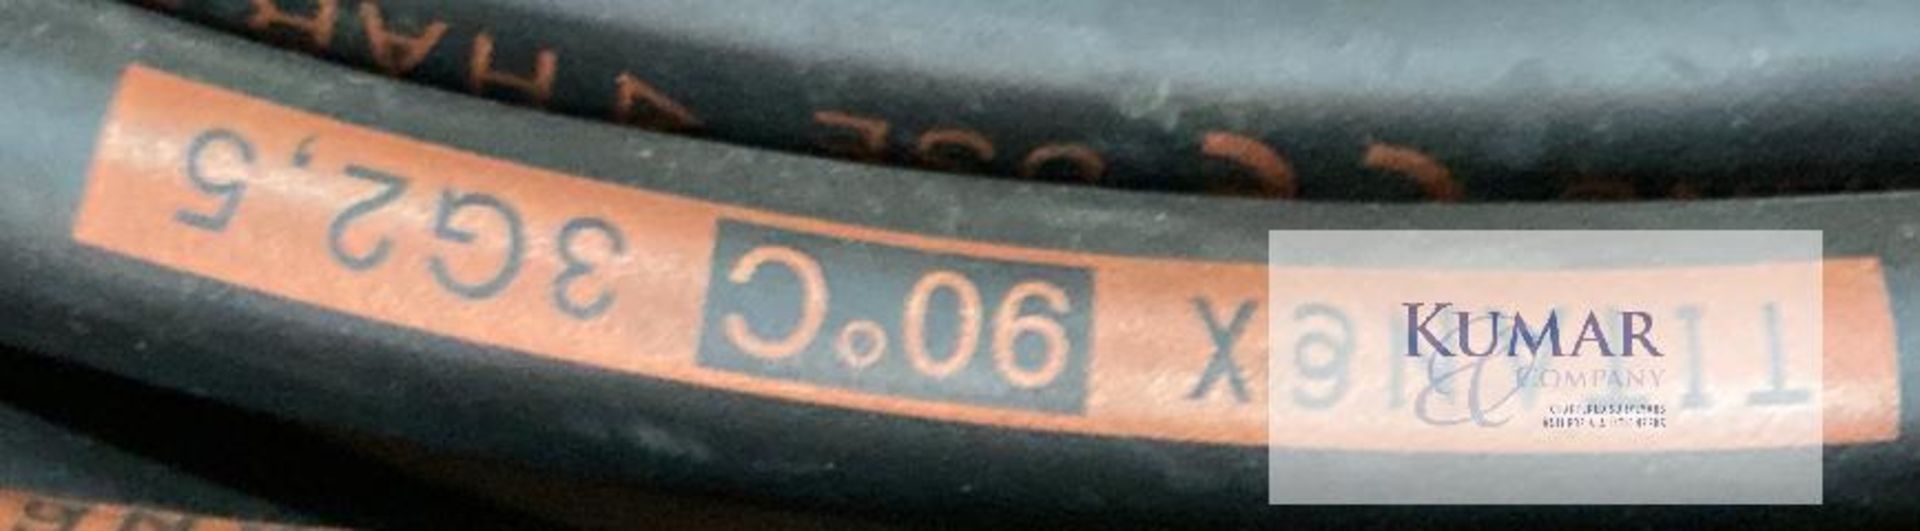 20 of 10m 16A cable midnight black (2.5mm) Description: Bundle of 20x 10m 3-core (2.5mm) 16A - Image 7 of 7